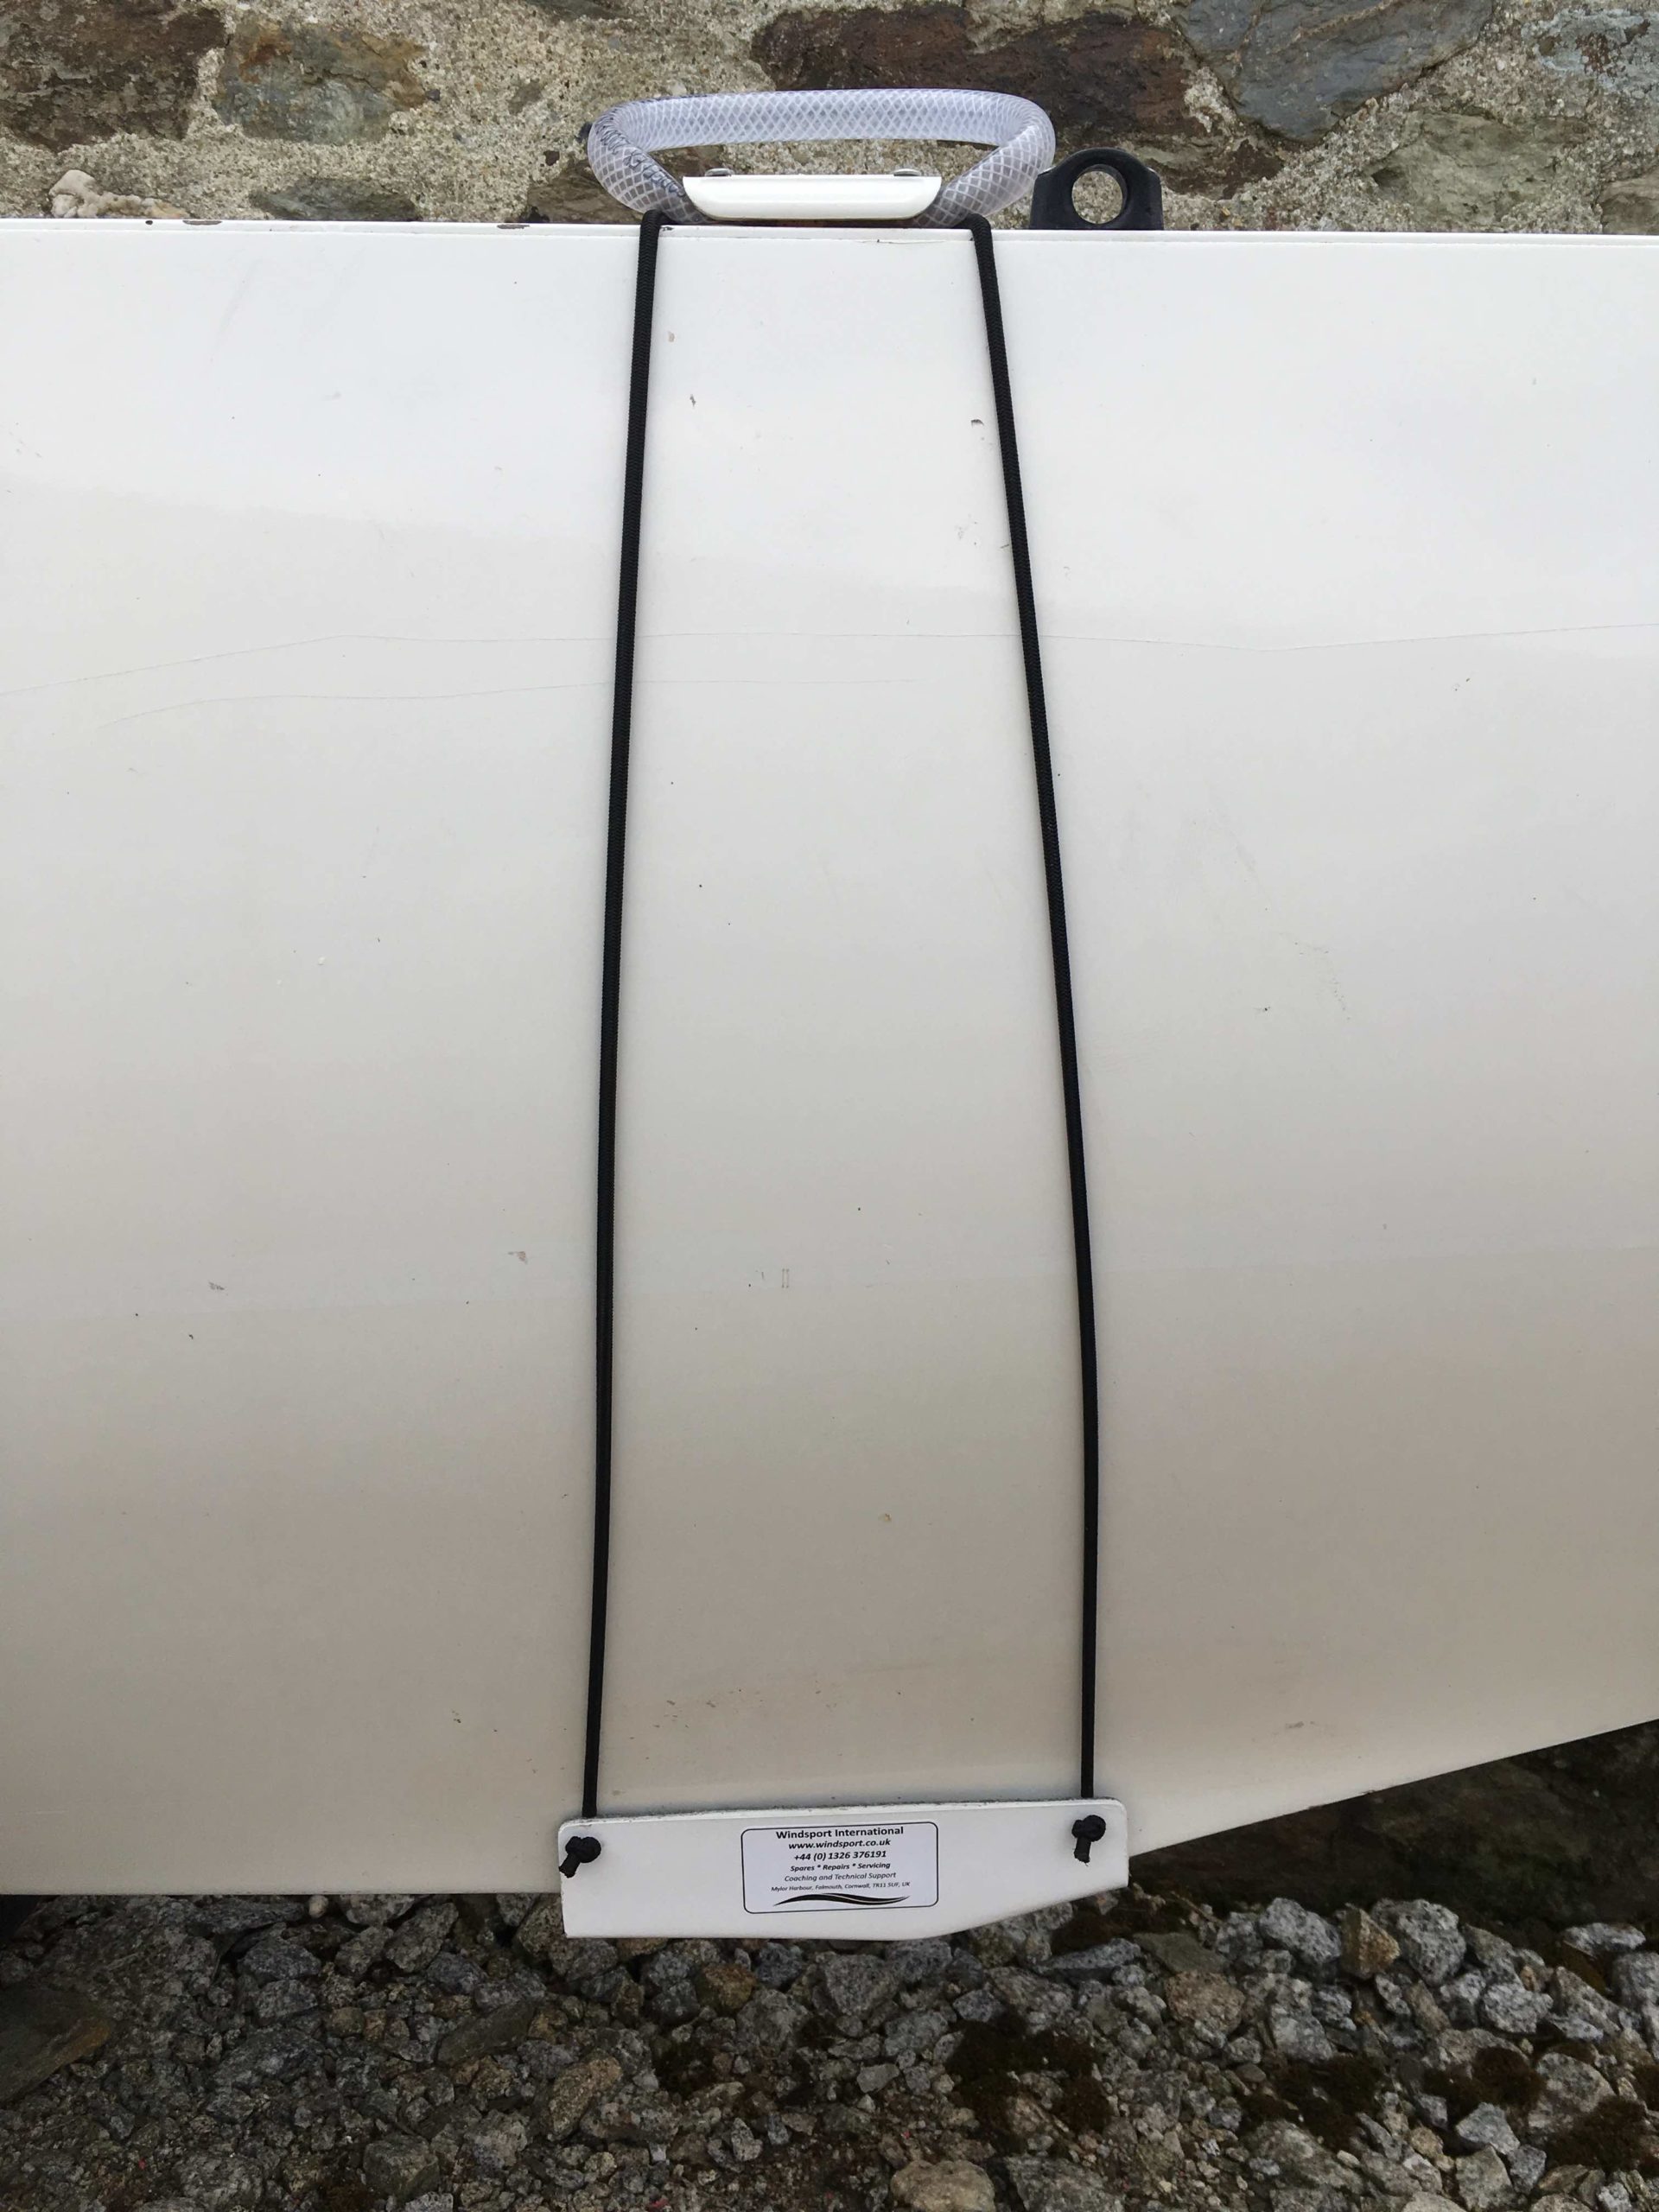 Compact Skeg protector Assembly per pair – Windsport – CatParts